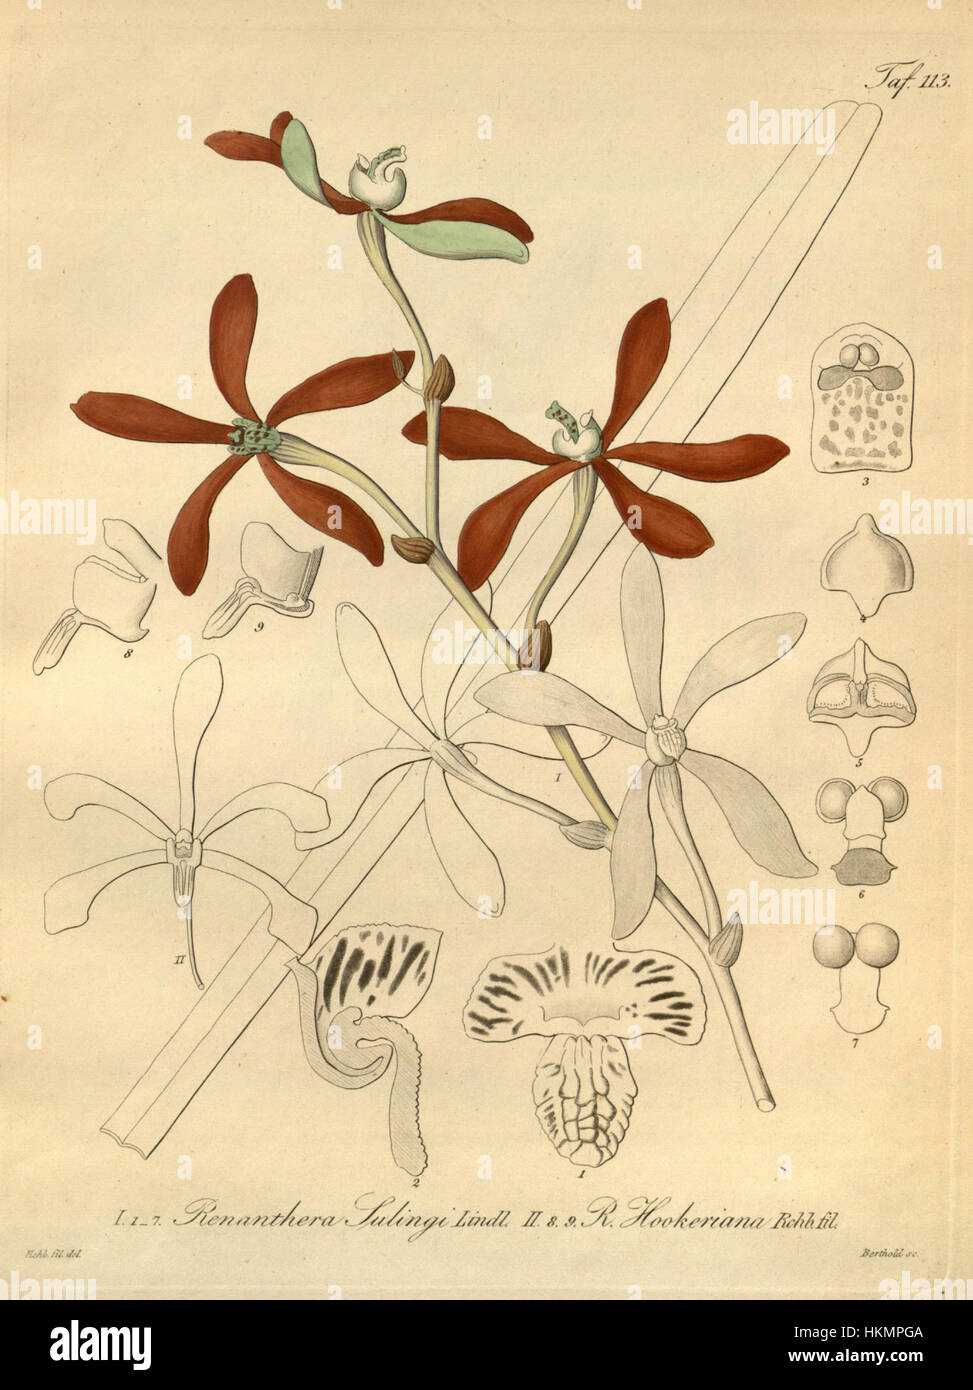 Armodorum sulingi (as Renanthera sulingi) - Arachnis hookeriana (as Renanthera hookeriana) - Xenia 2 pl 113 Stock Photo